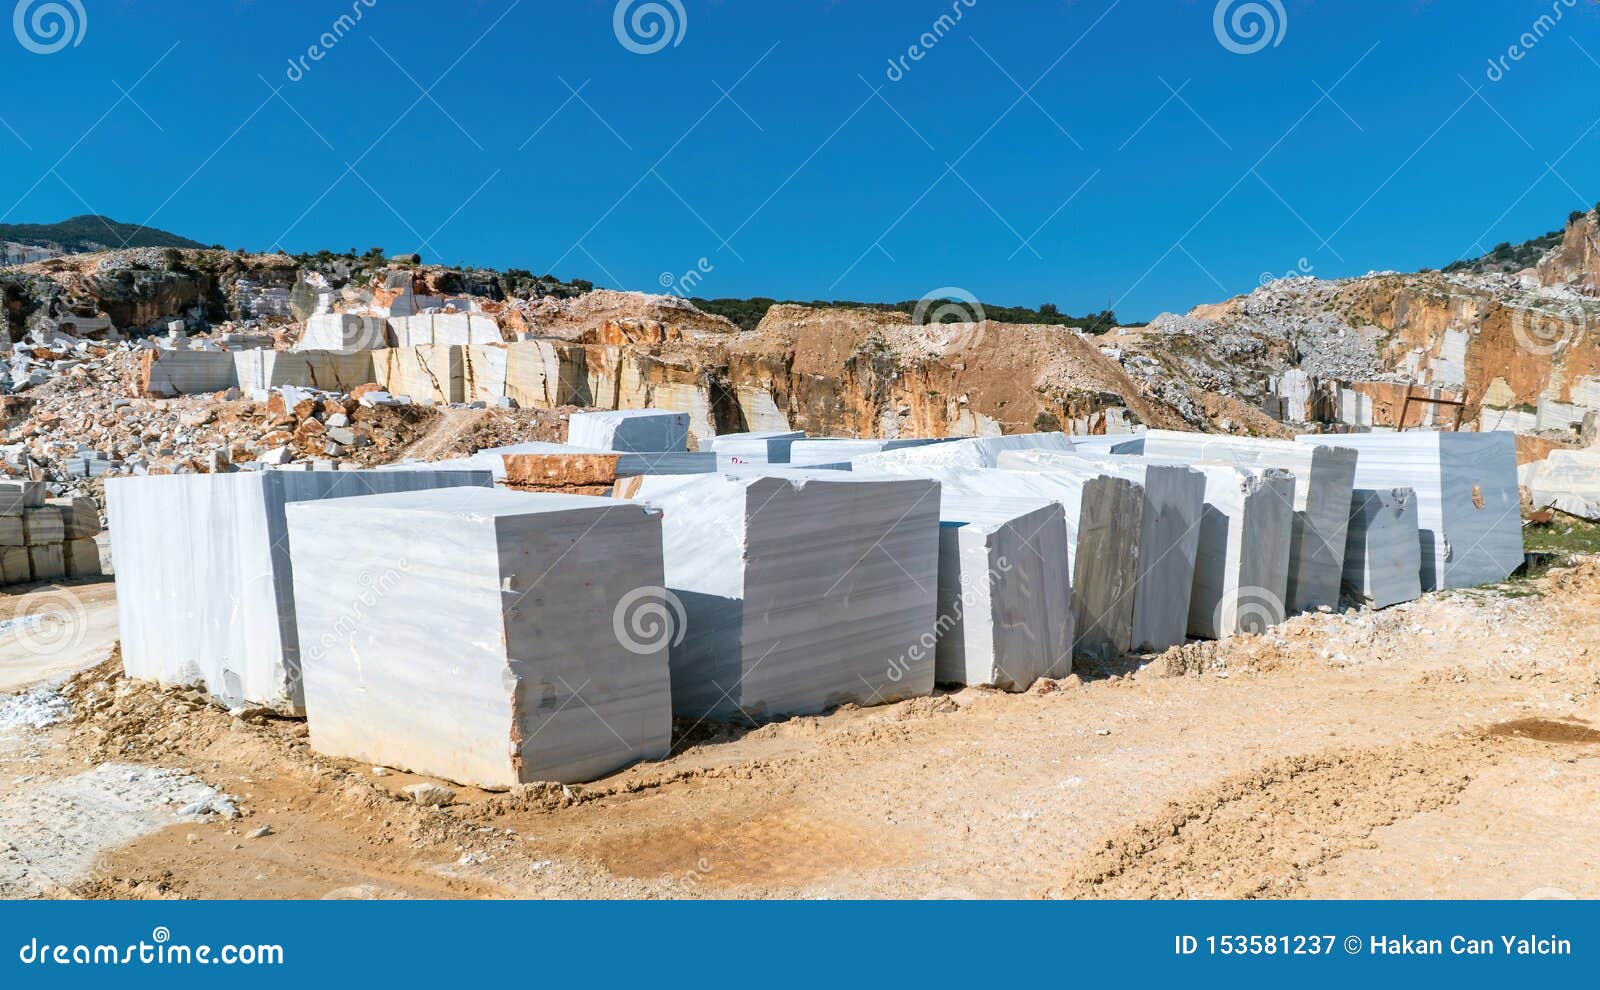 marble blocks extracted from a quarry in marmara island, balikesir, turkey